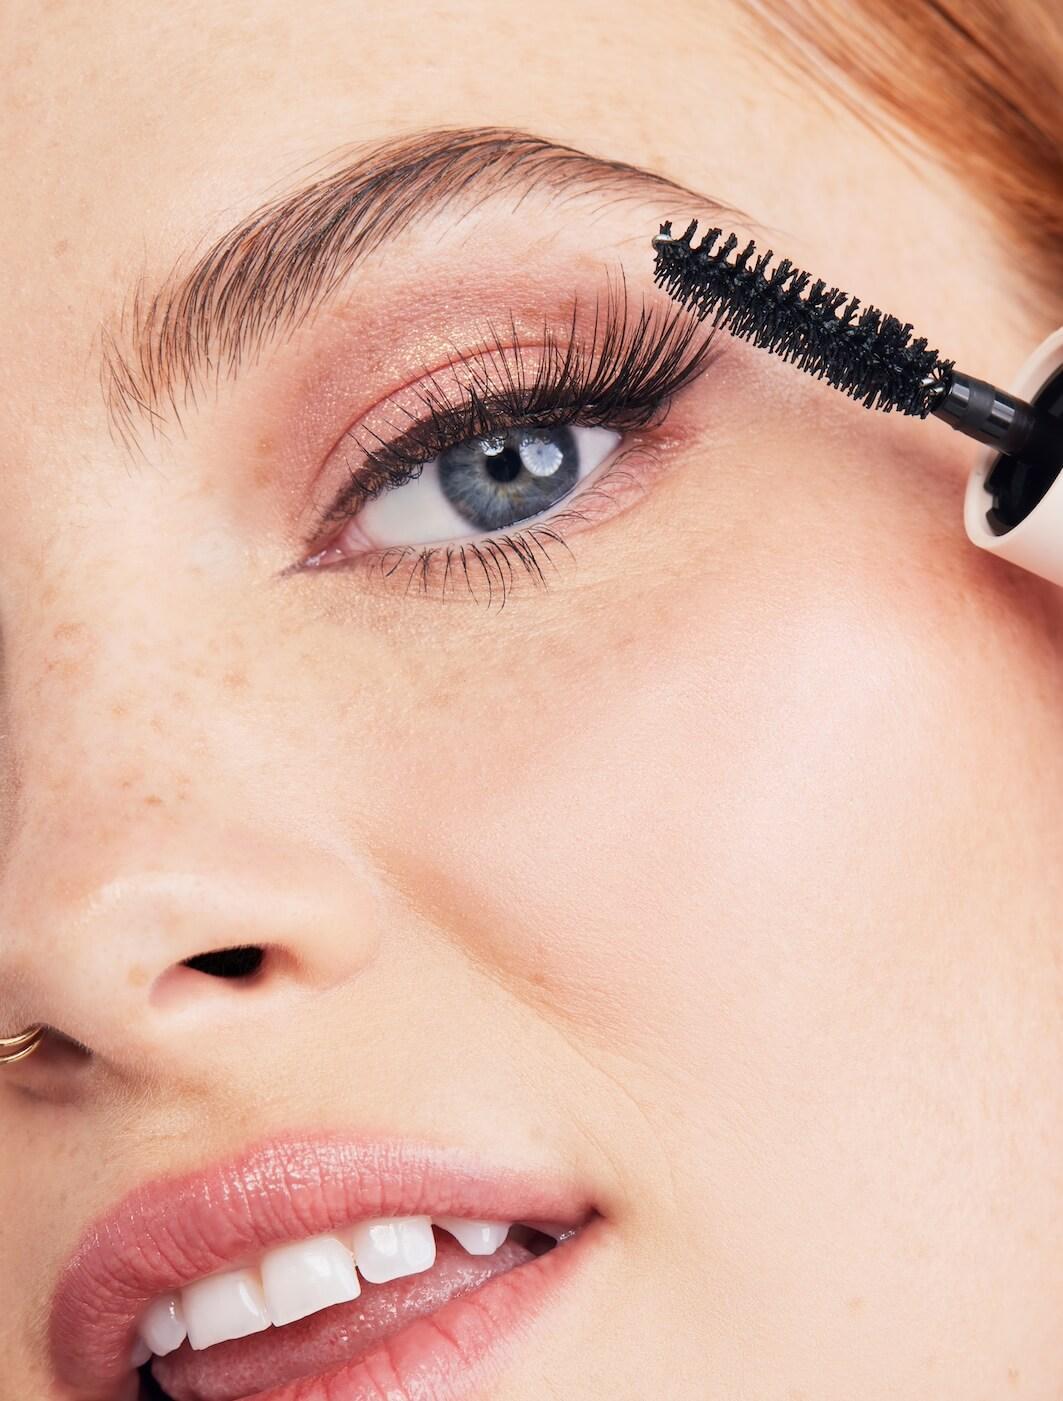 Close-up image of a woman putting on mascara